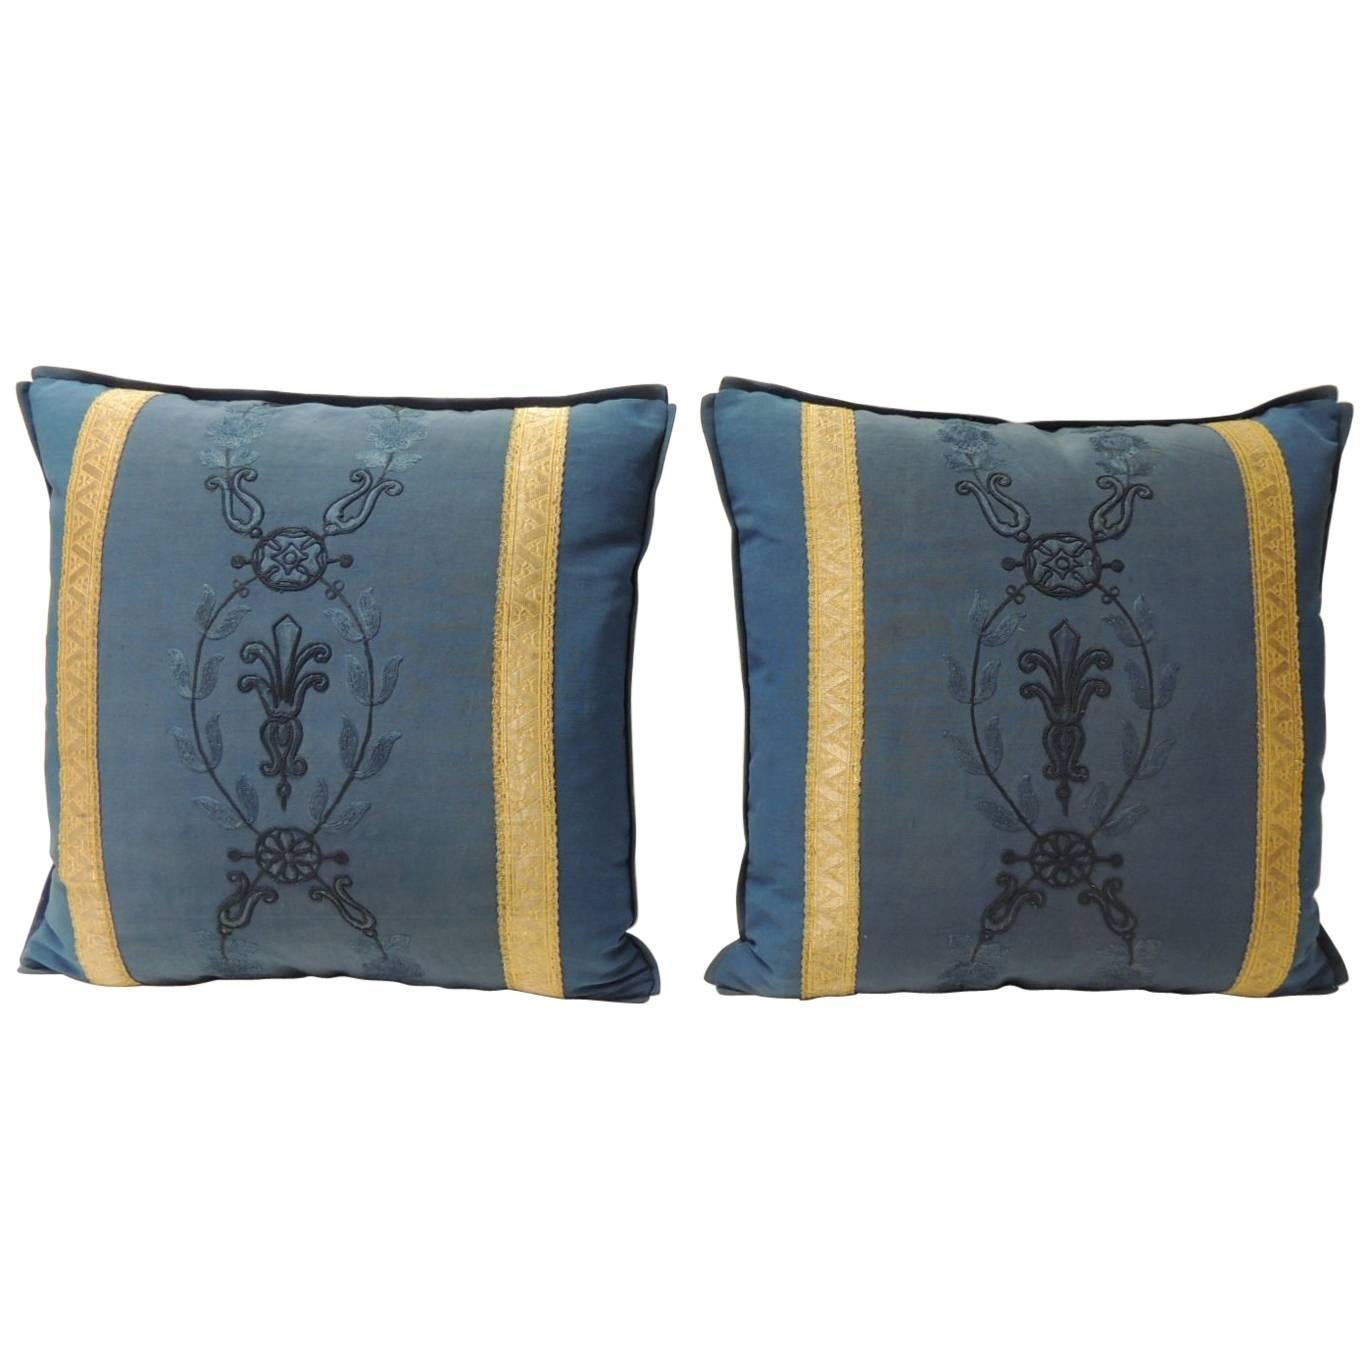 Pair of Royal Blue Embroidery Antique Textile Decorative Pillows